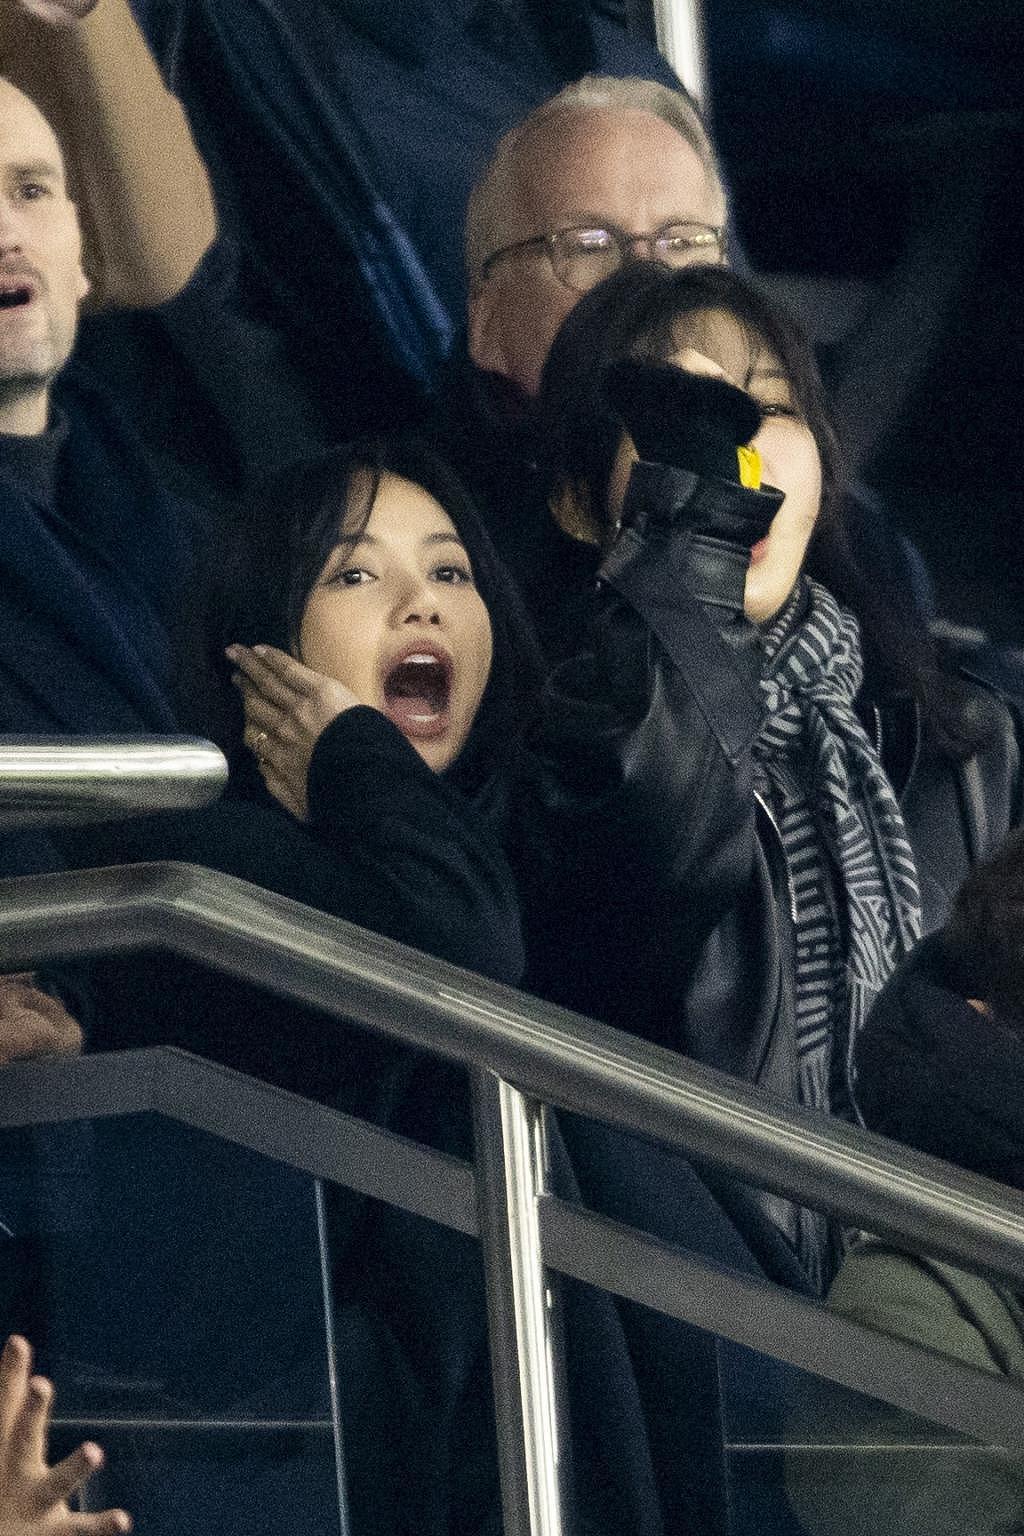 Lisa 现身巴黎观看足球赛 兴奋激动为球员欢呼 - 1